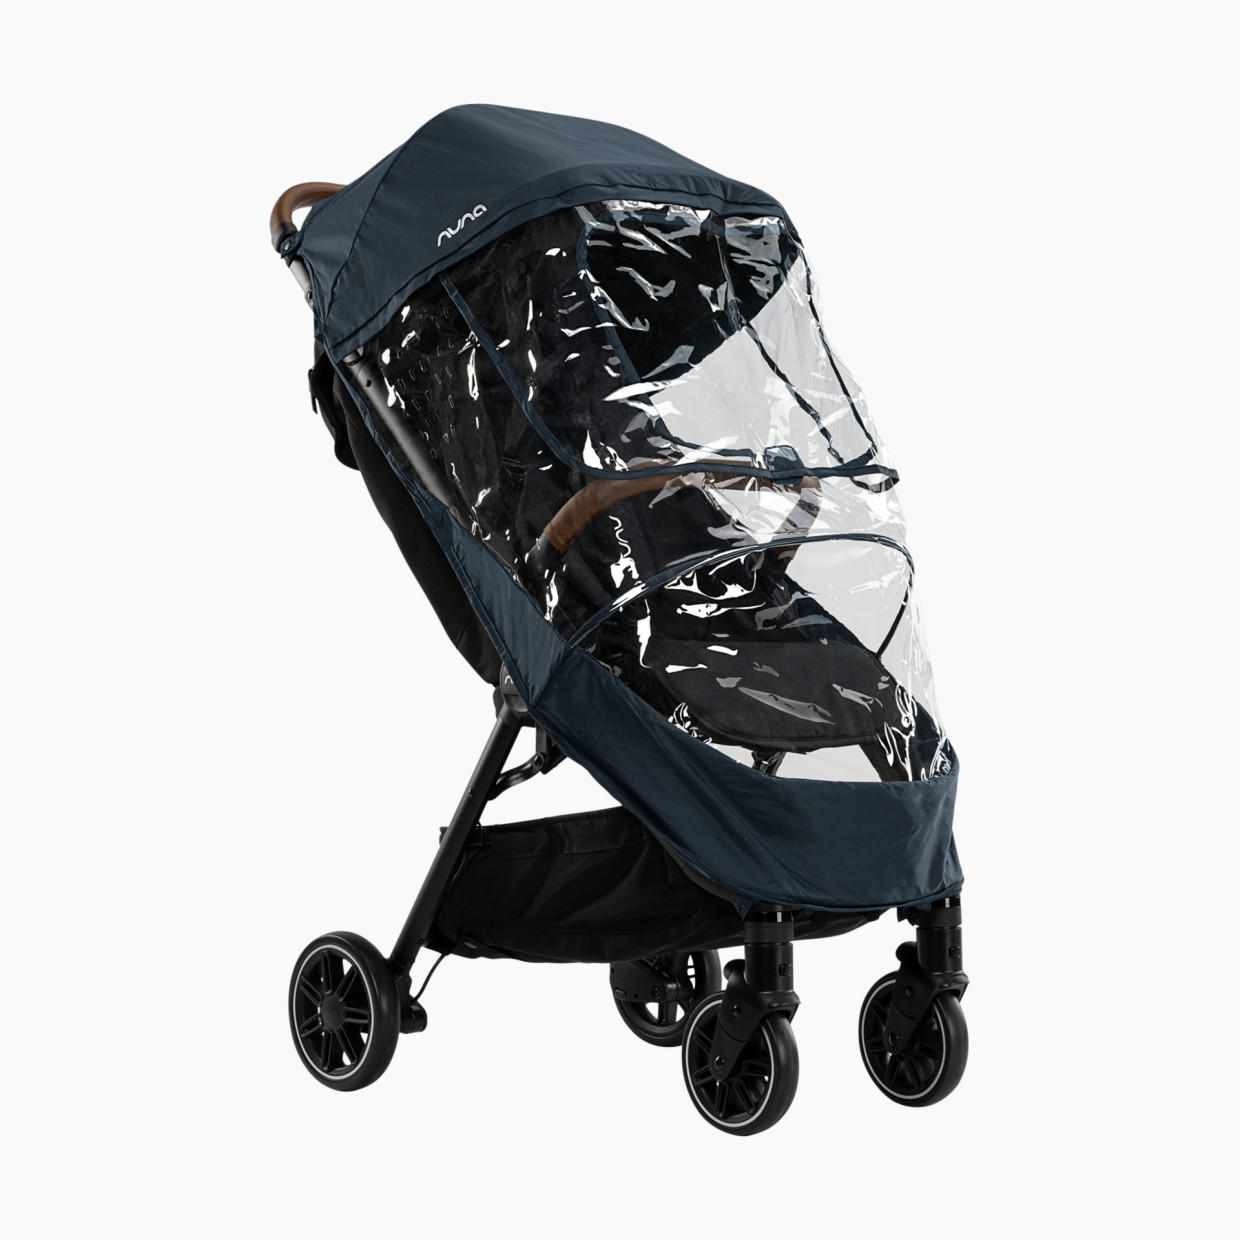 Nuna TRVL Easy Fold Compact Stroller Raincover.